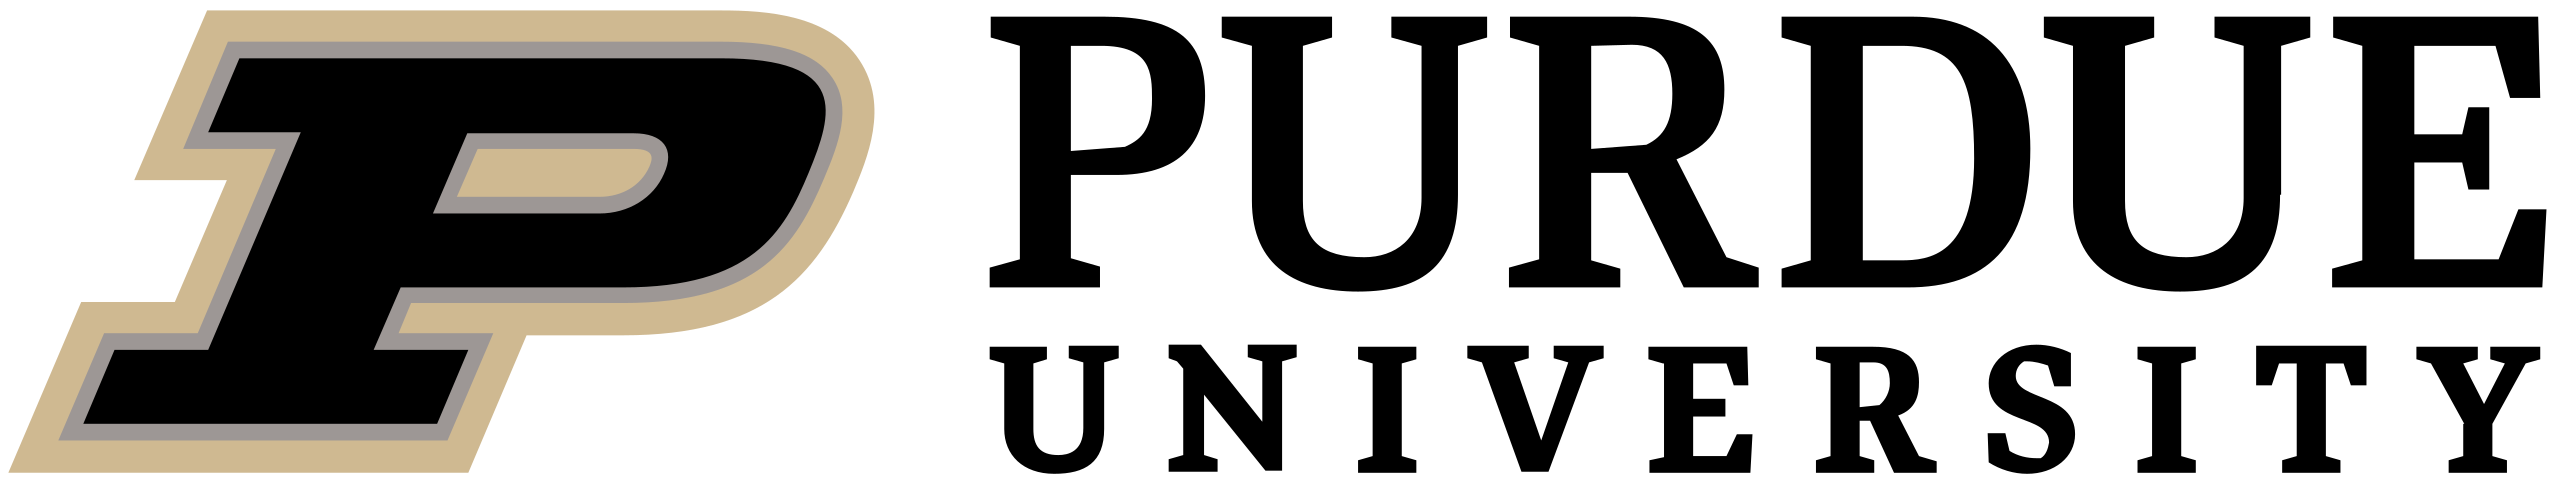 Purdue_University_system_logo